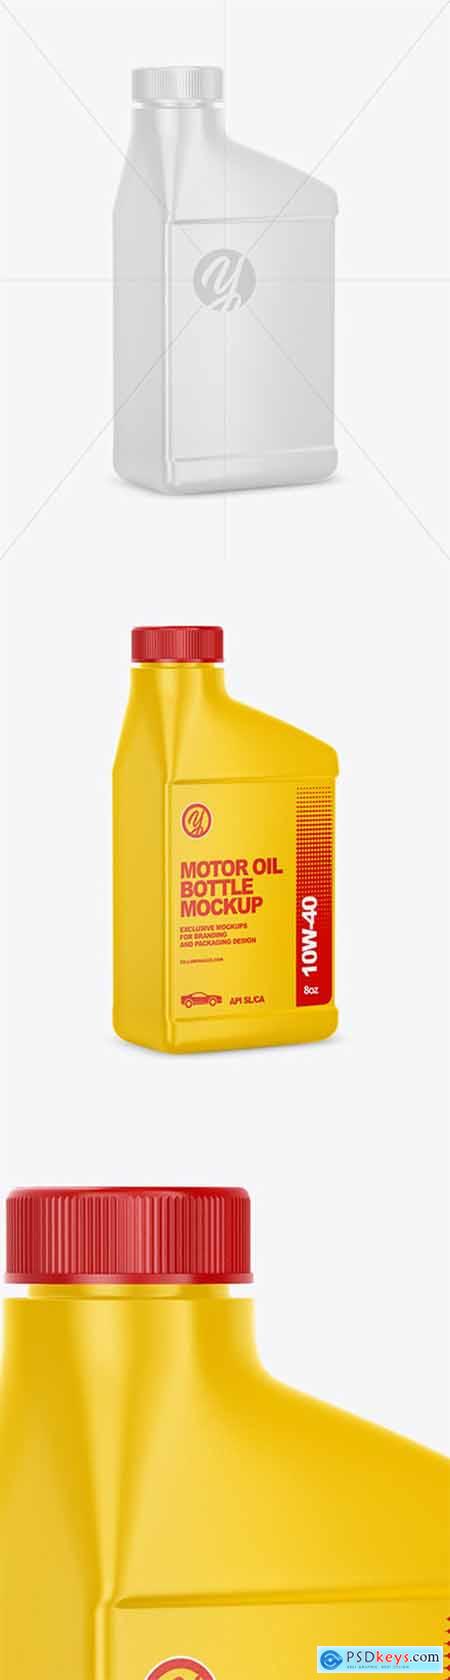 Download Motor Oil Bottle Mockup 60632 Free Download Photoshop Vector Stock Image Via Torrent Zippyshare From Psdkeys Com